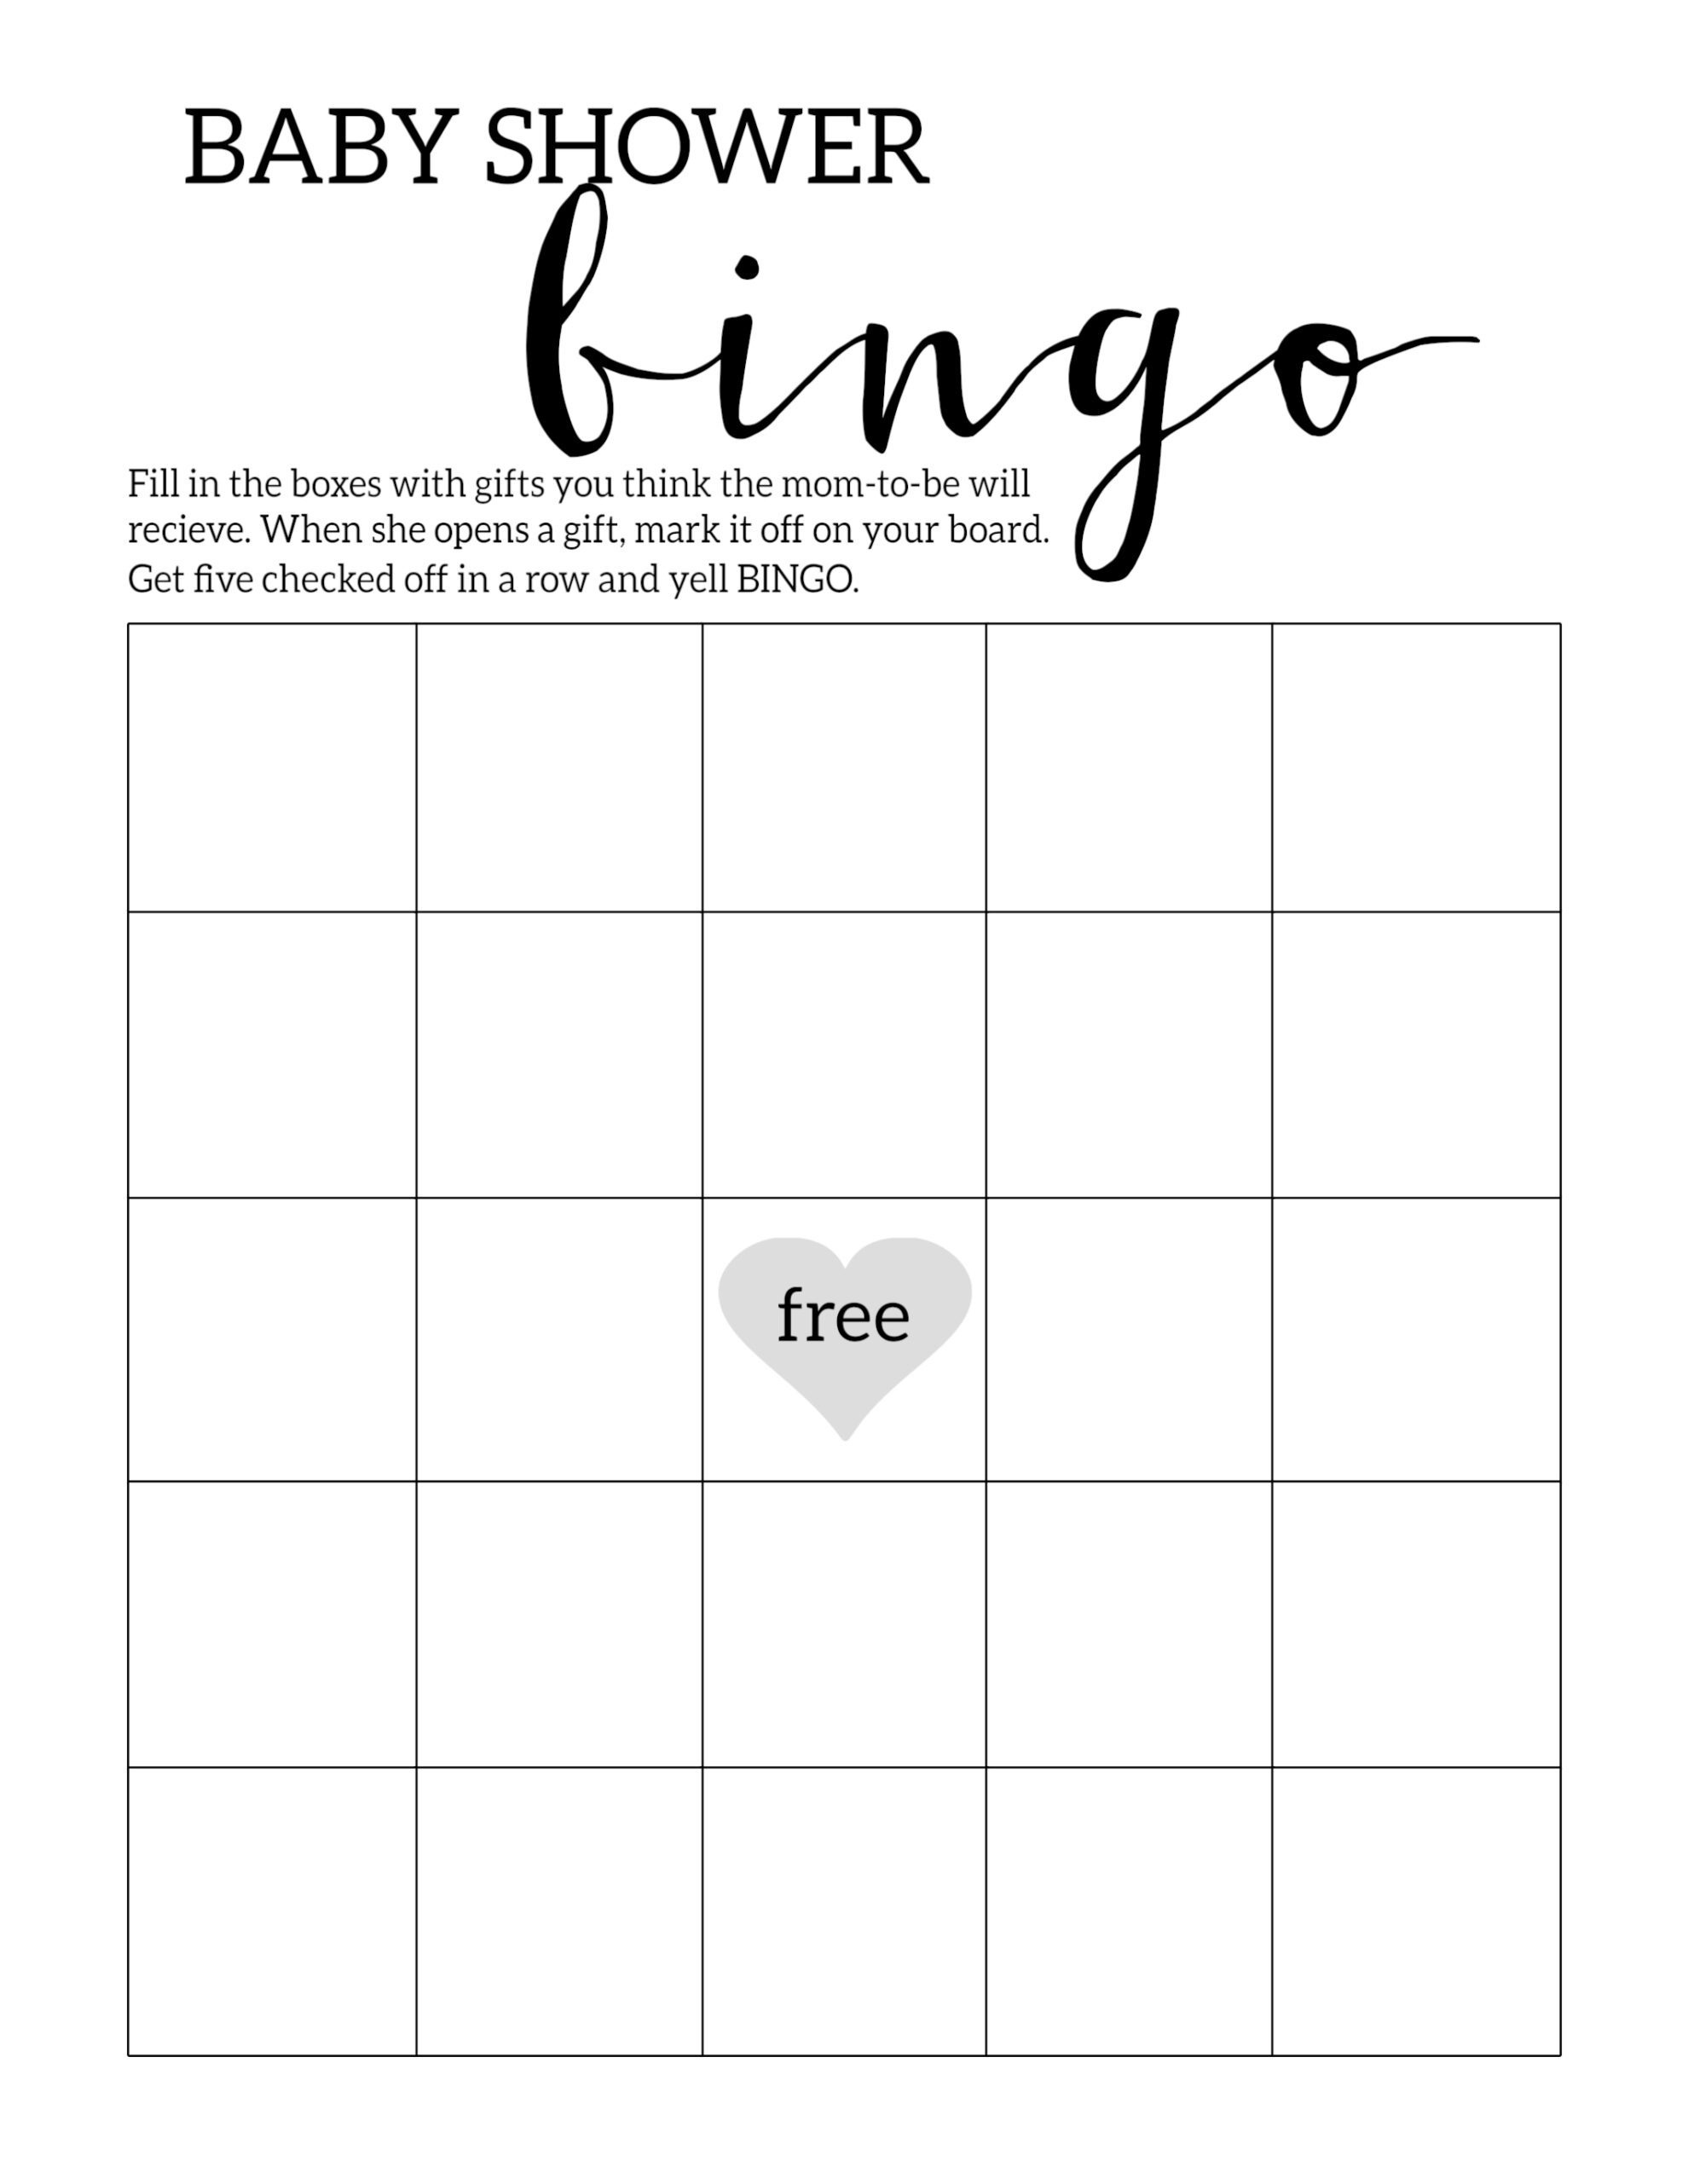 Baby Shower Bingo Printable Cards Template - Paper Trail Design - Baby Bingo Free Printable